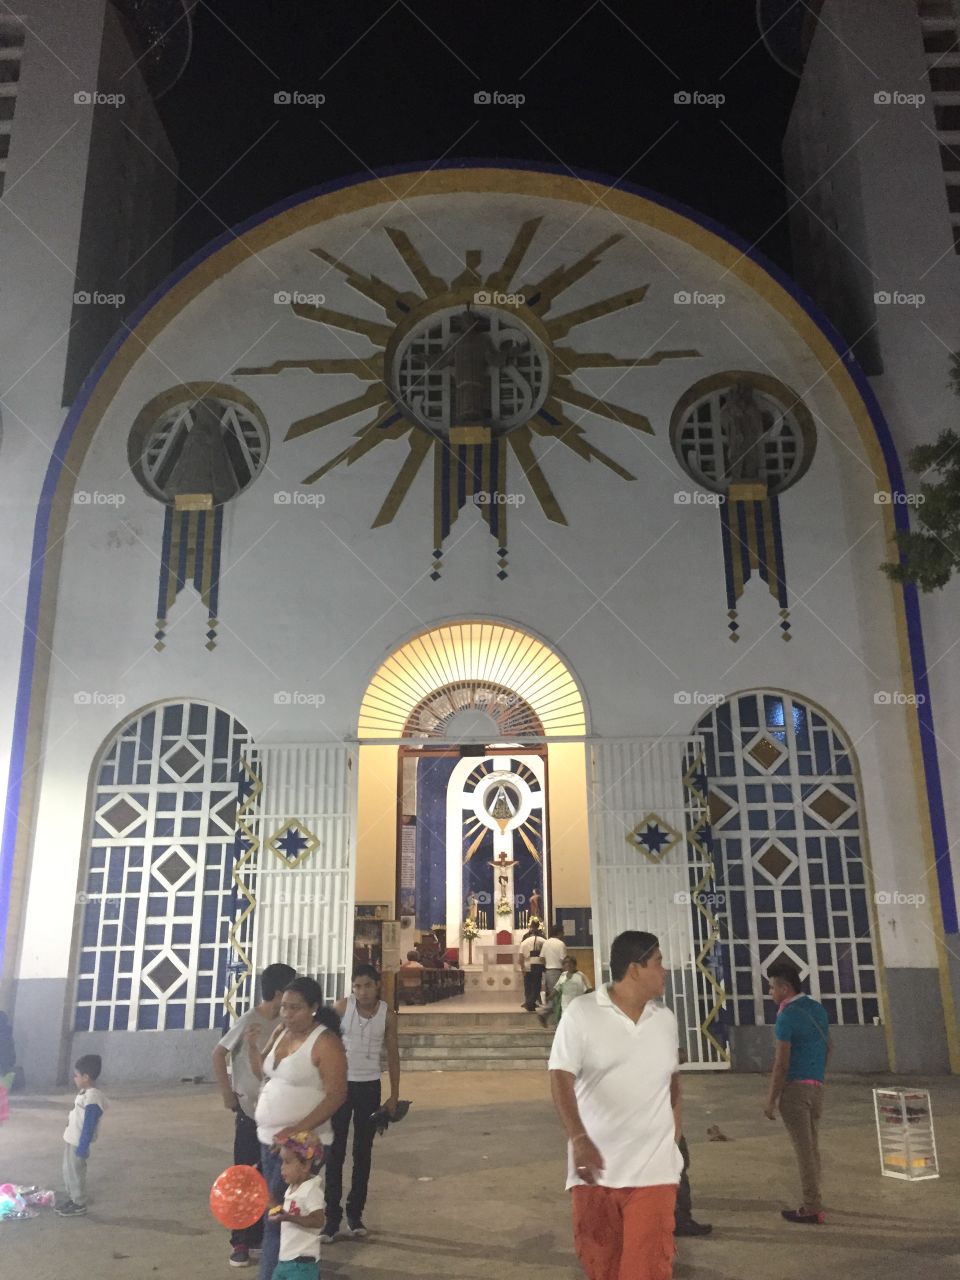 A cool church in Mexico 